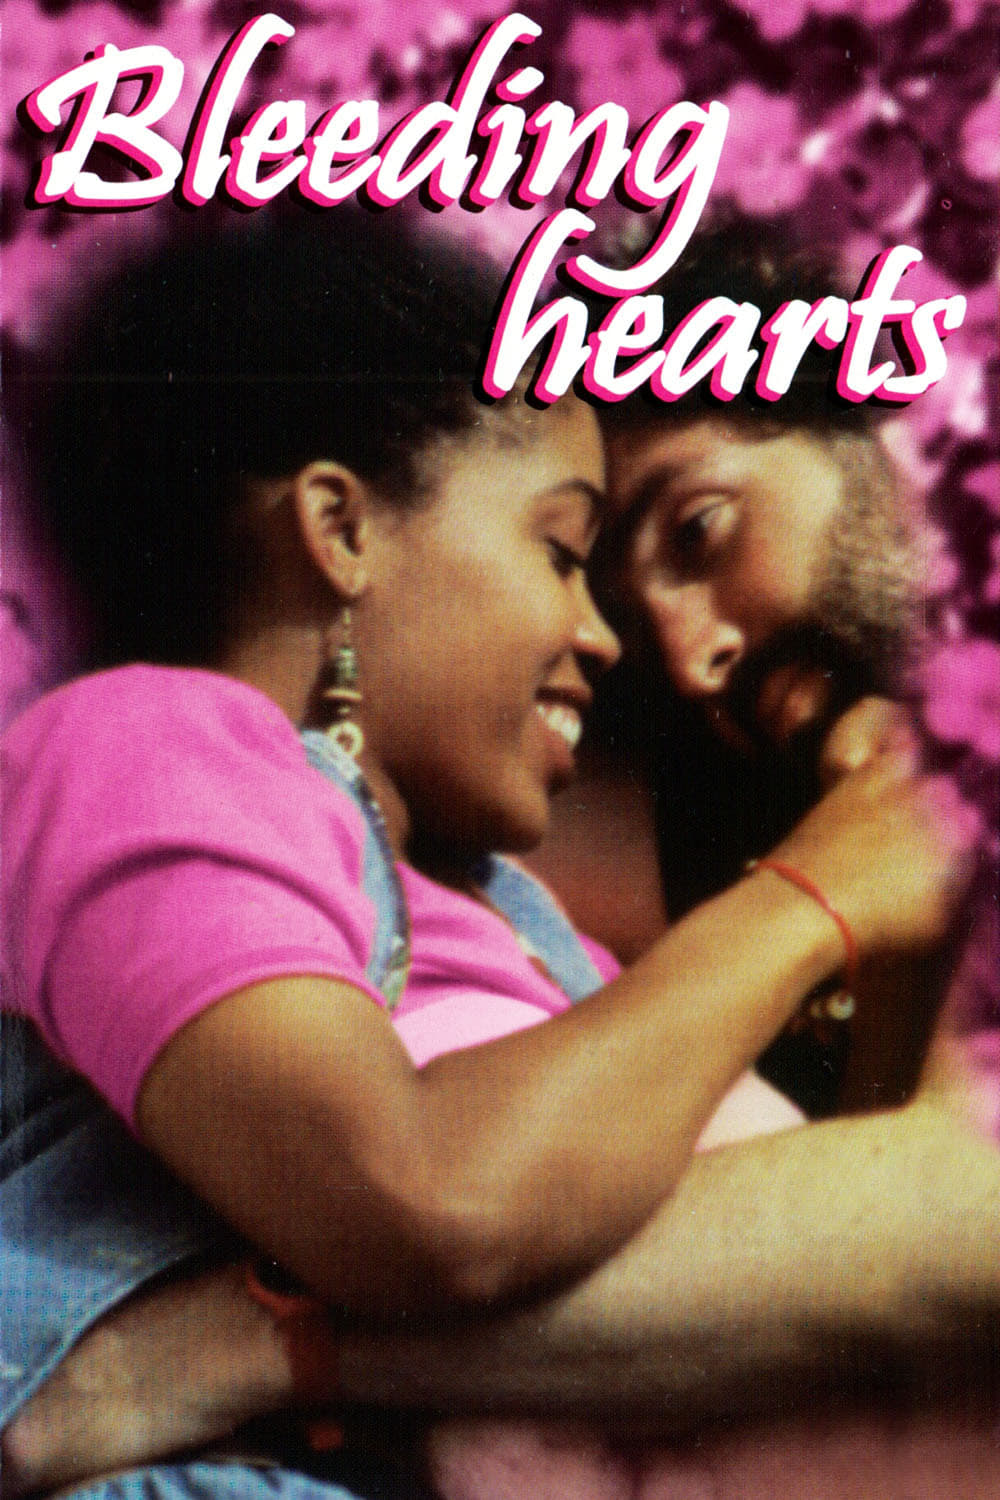 Bleeding Hearts (1995)